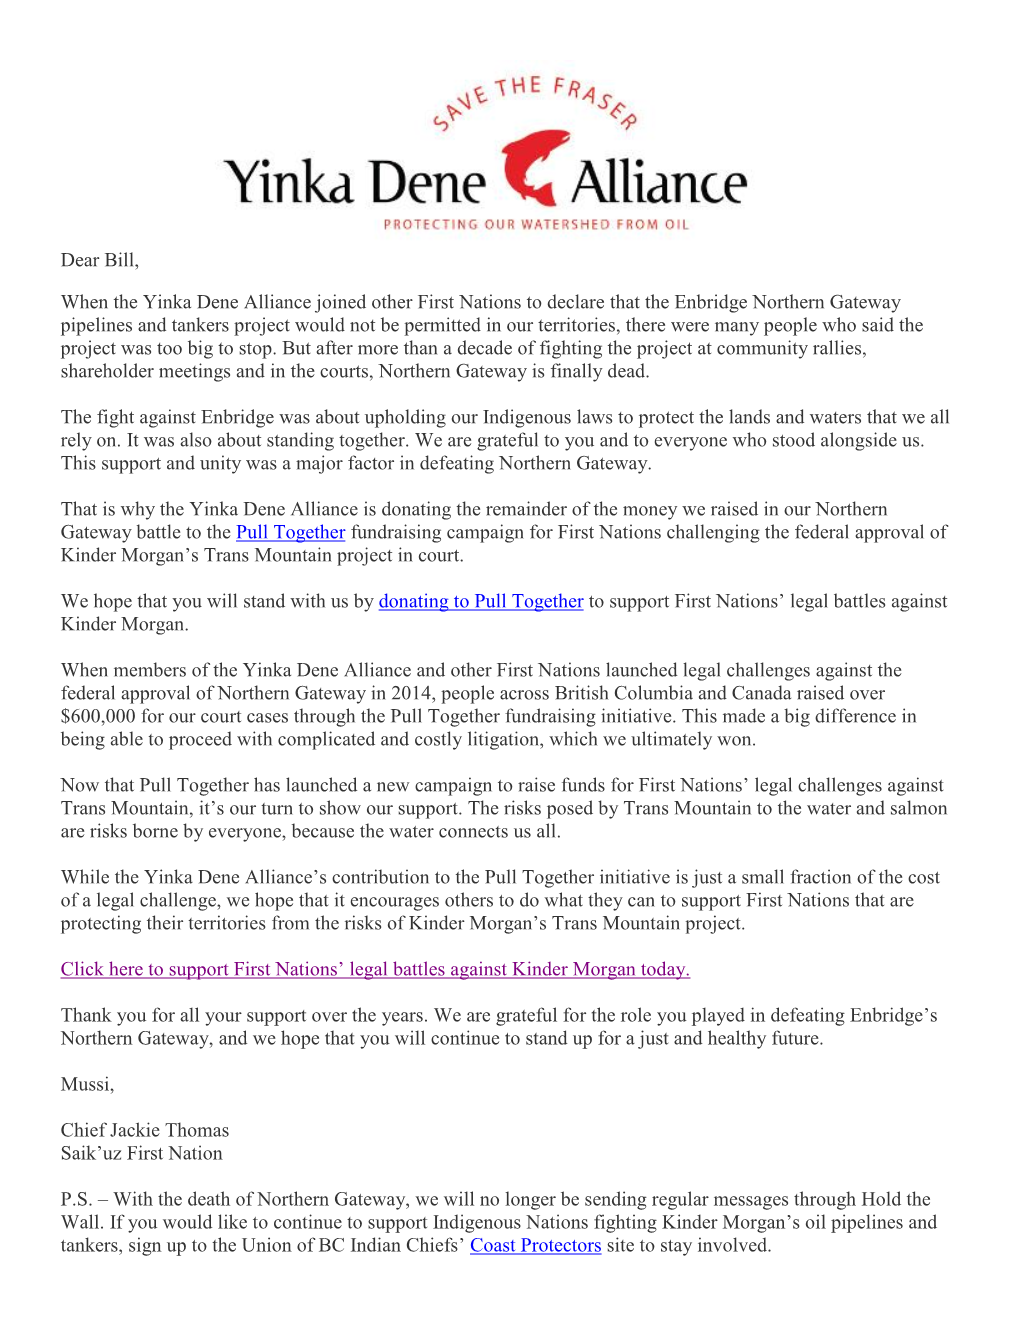 Dear Bill, When the Yinka Dene Alliance Joined Other First Nations